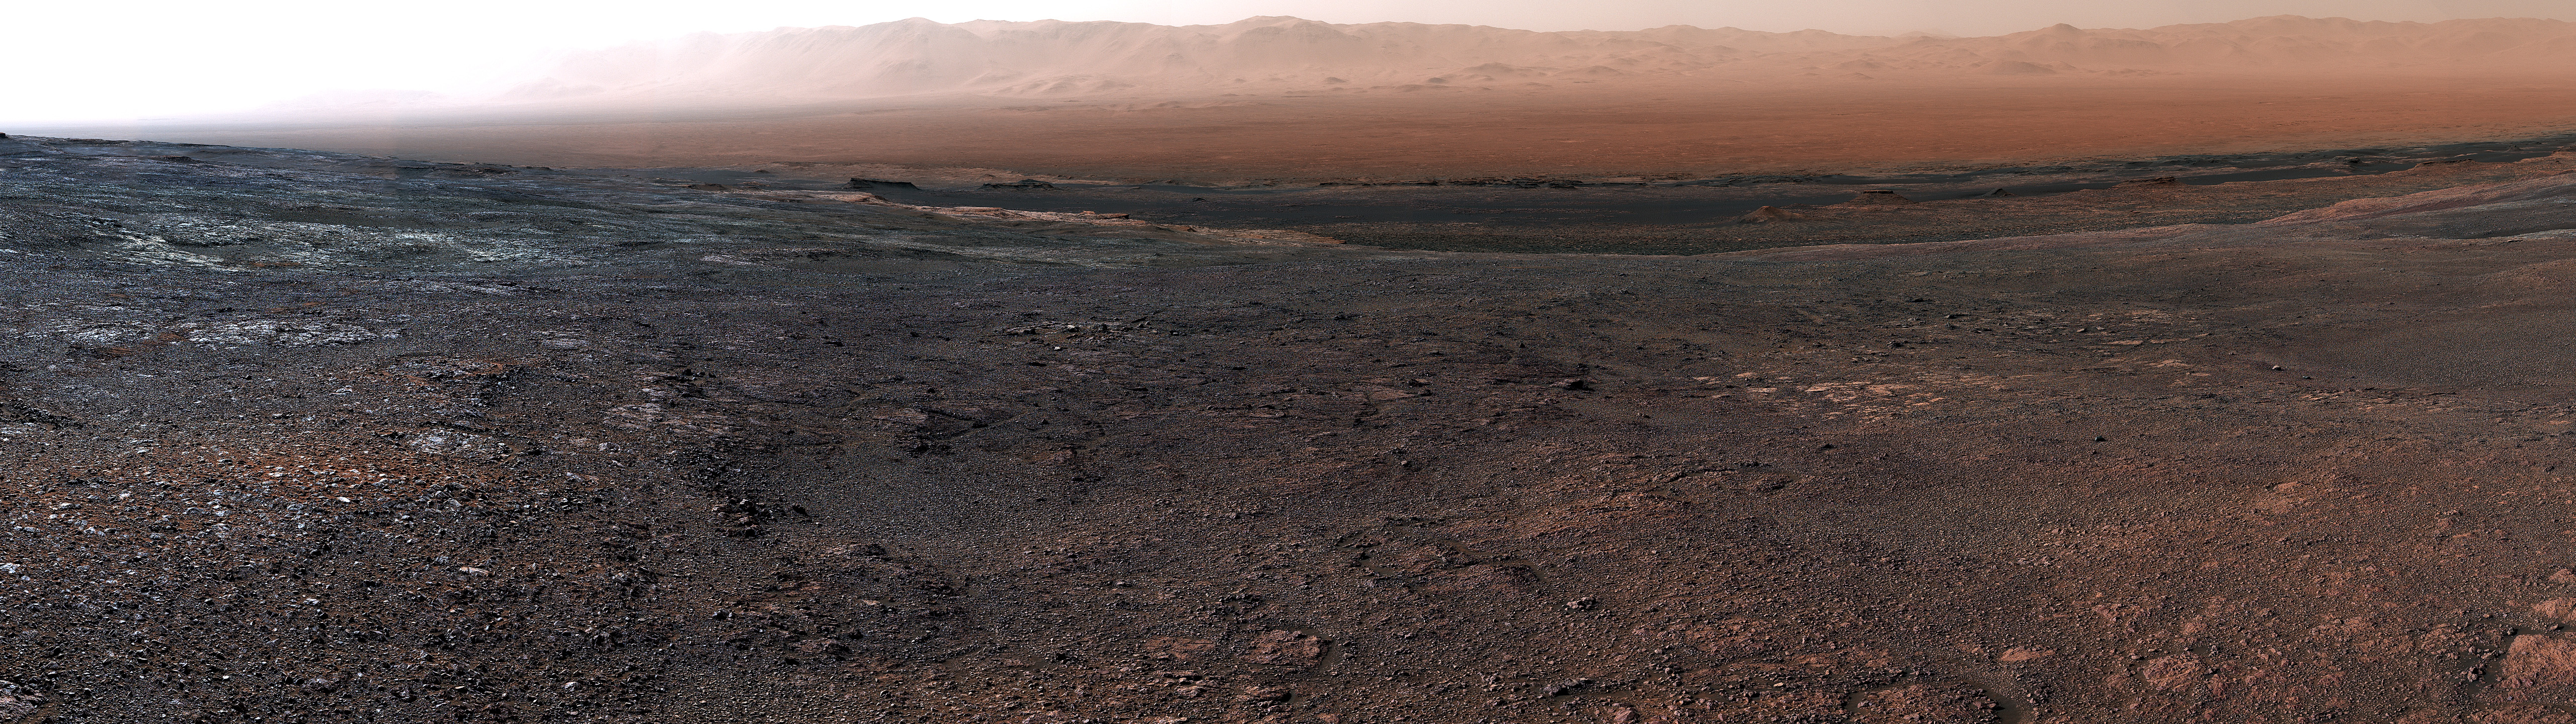 Ultrawide Mars NASA Landscape 5120x1440